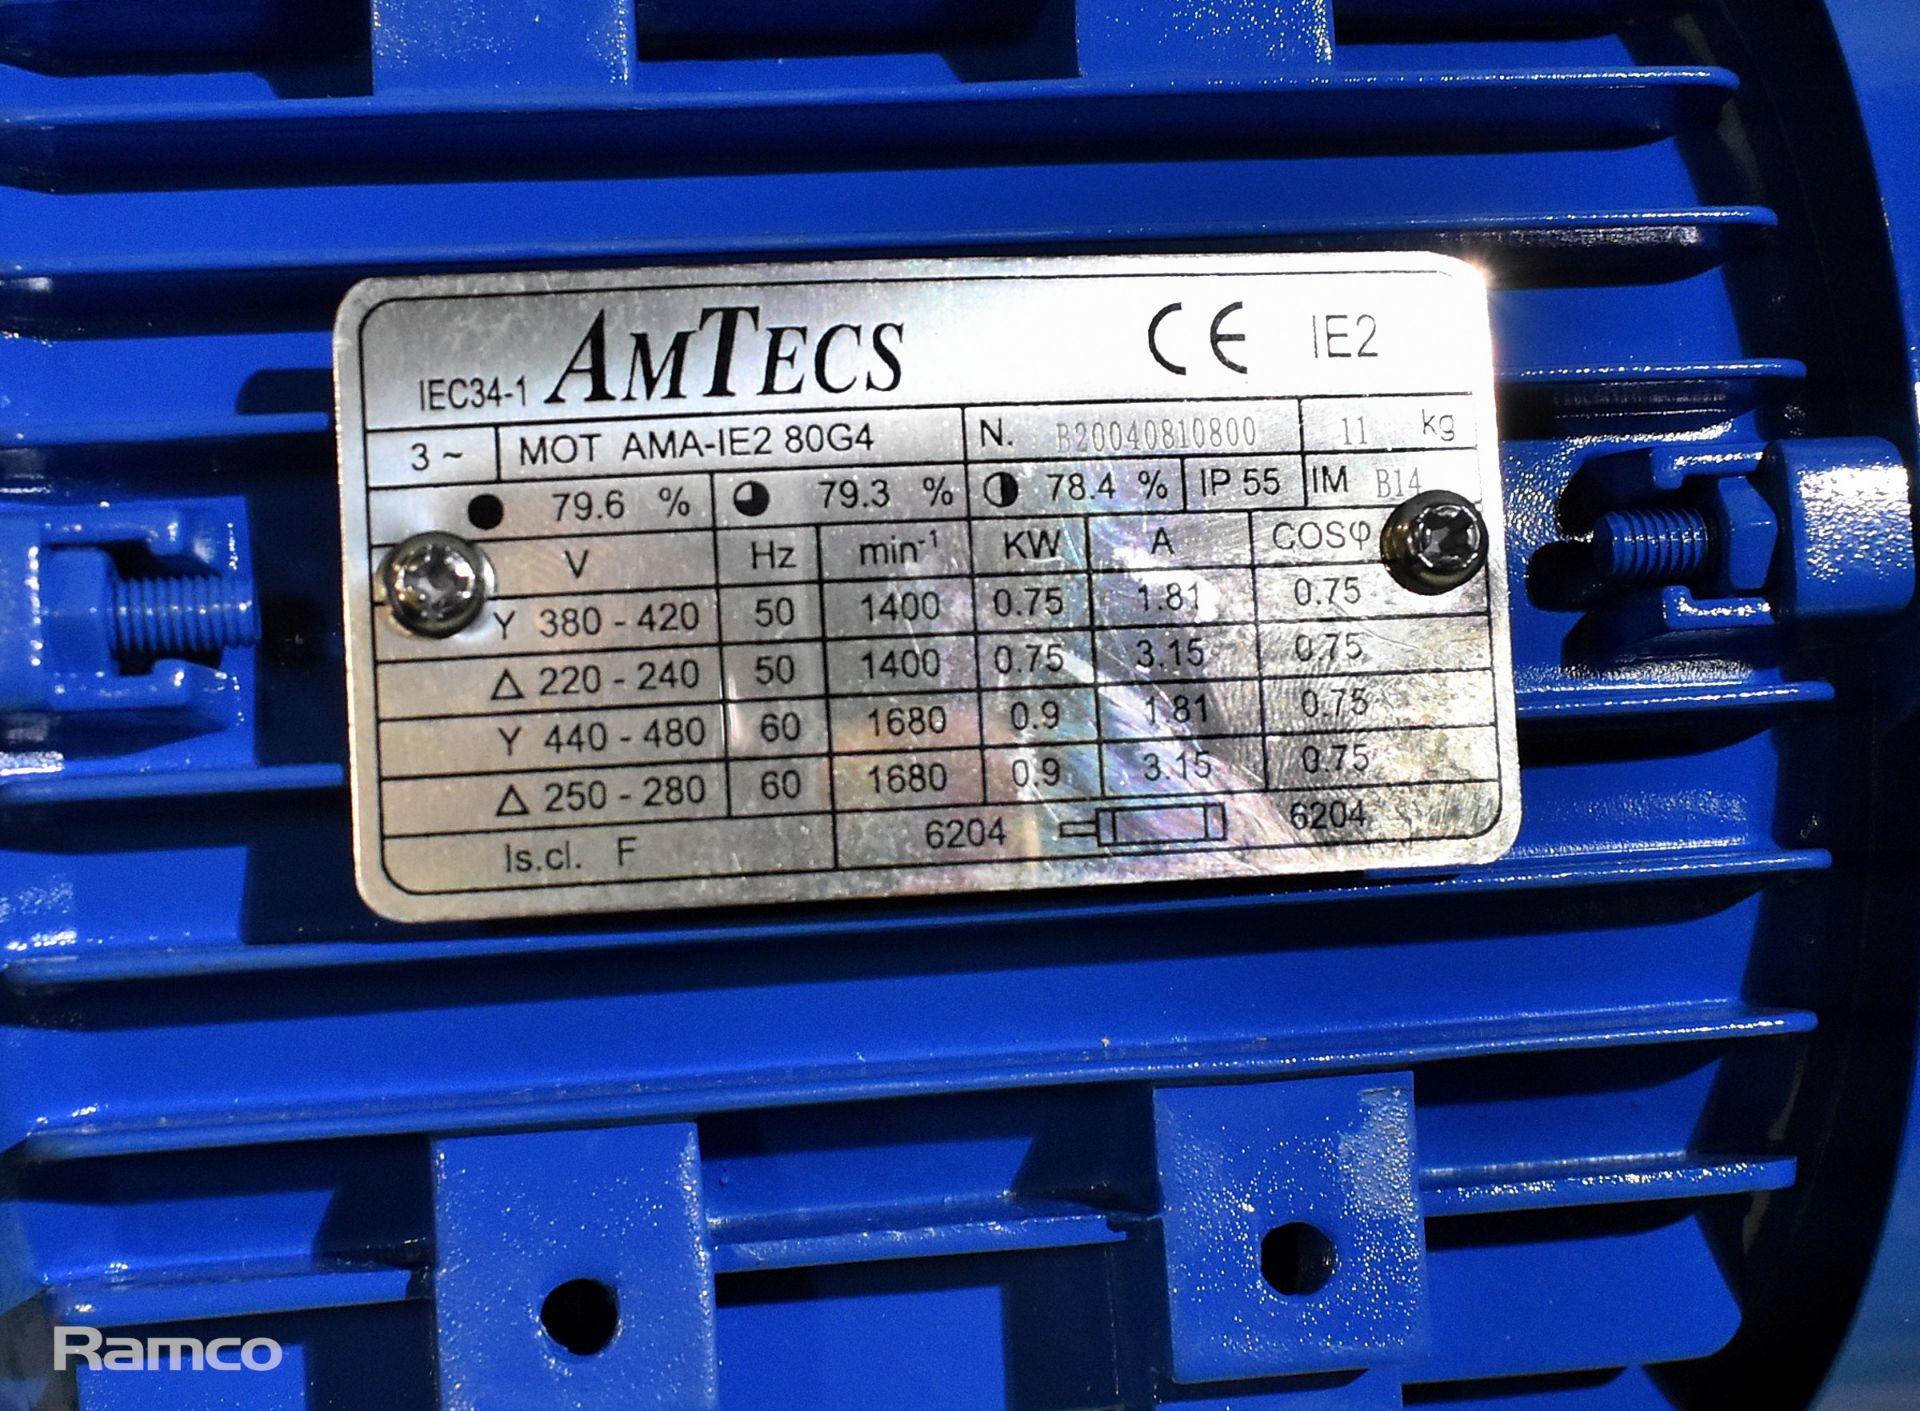 AmTecs IEC34-1 240V electric motor - Image 3 of 6